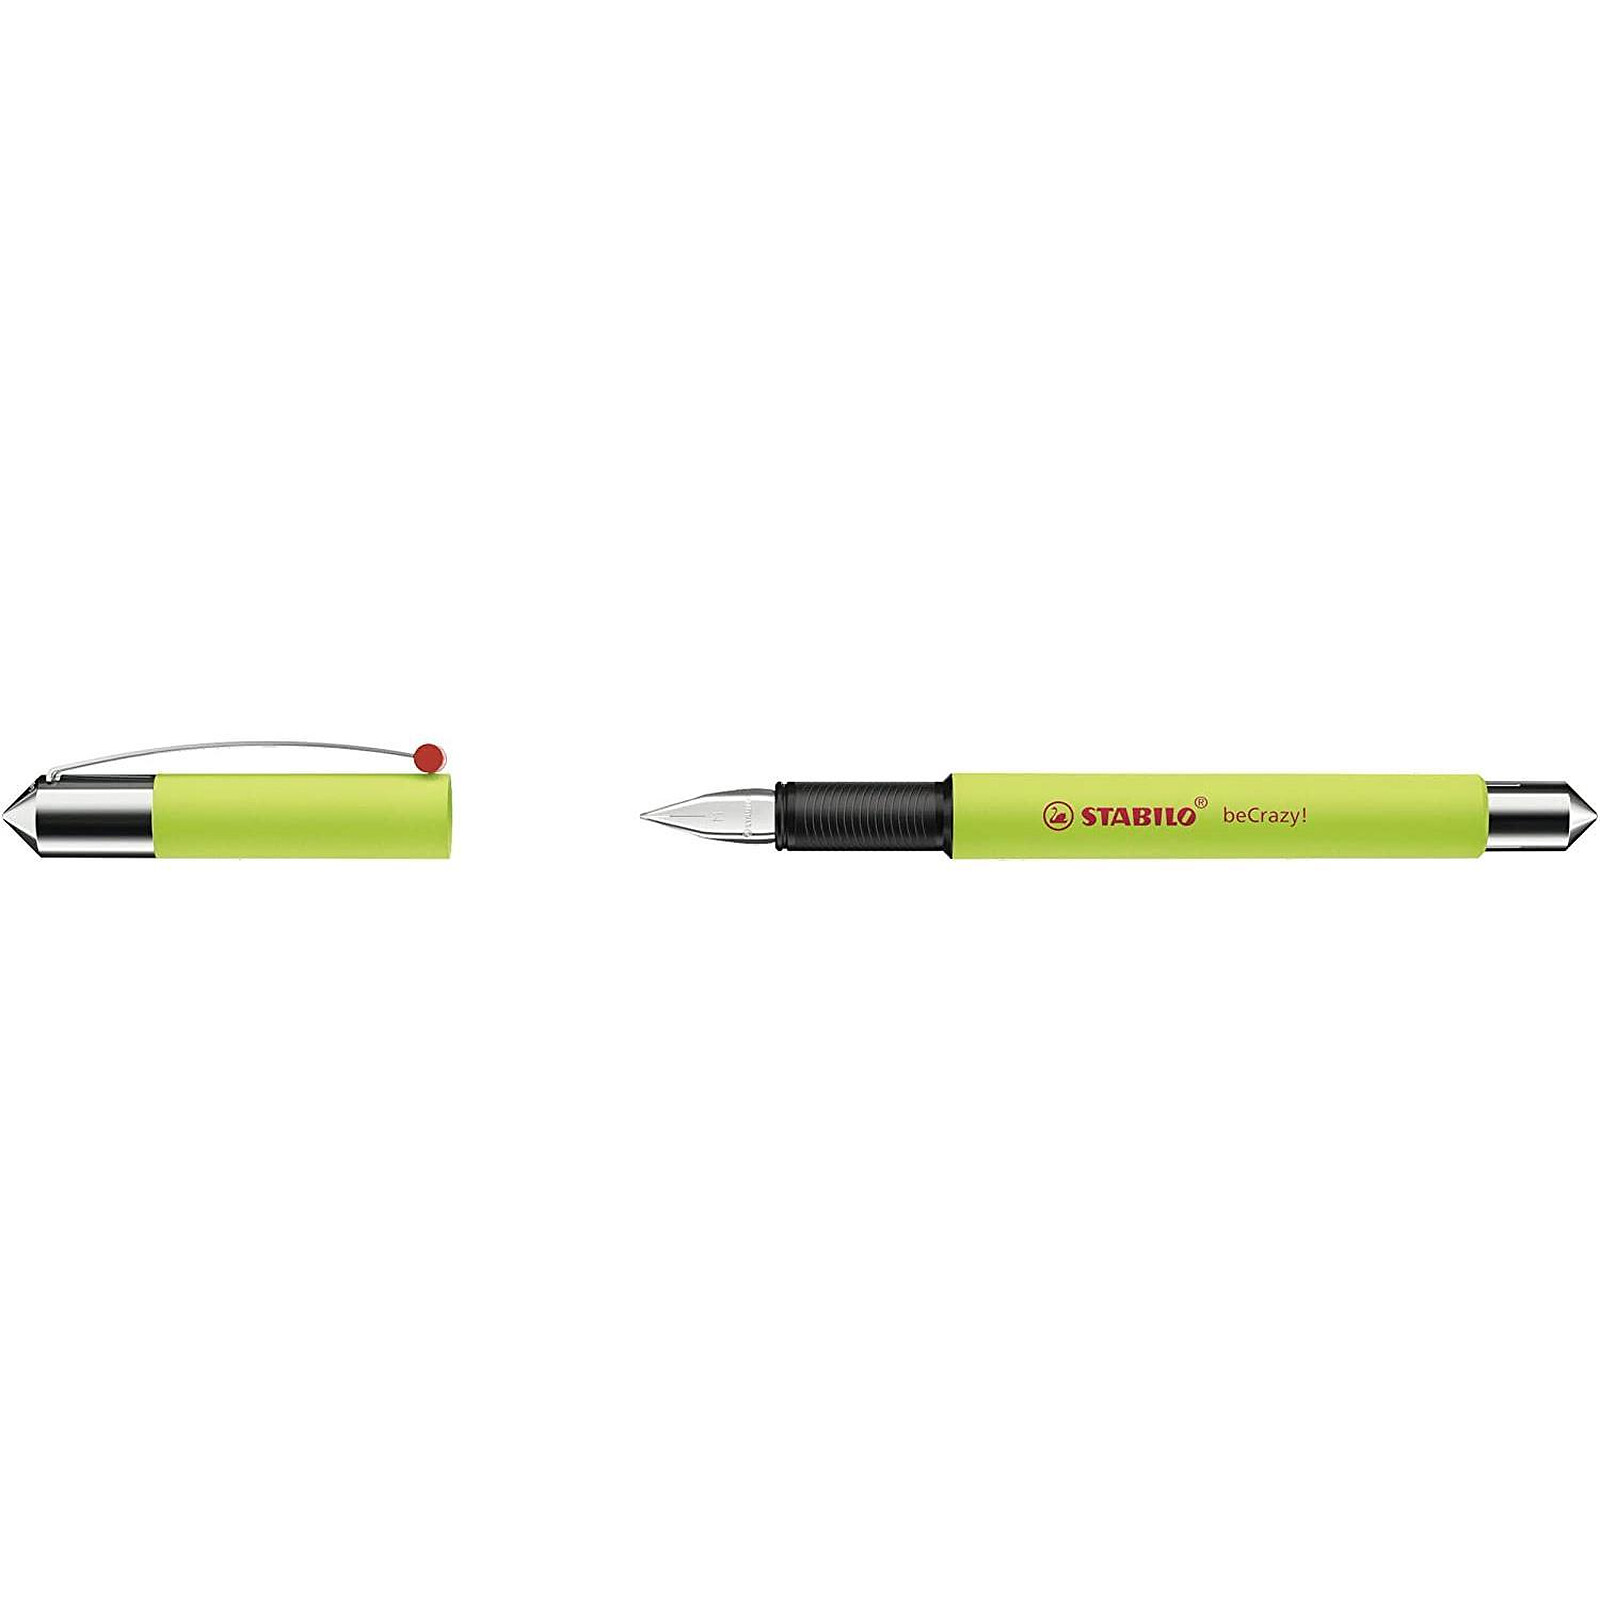 Waterman stylo plume Allure Pastel pointe fine, 6 cartouches d'encre  incluses, sous blister